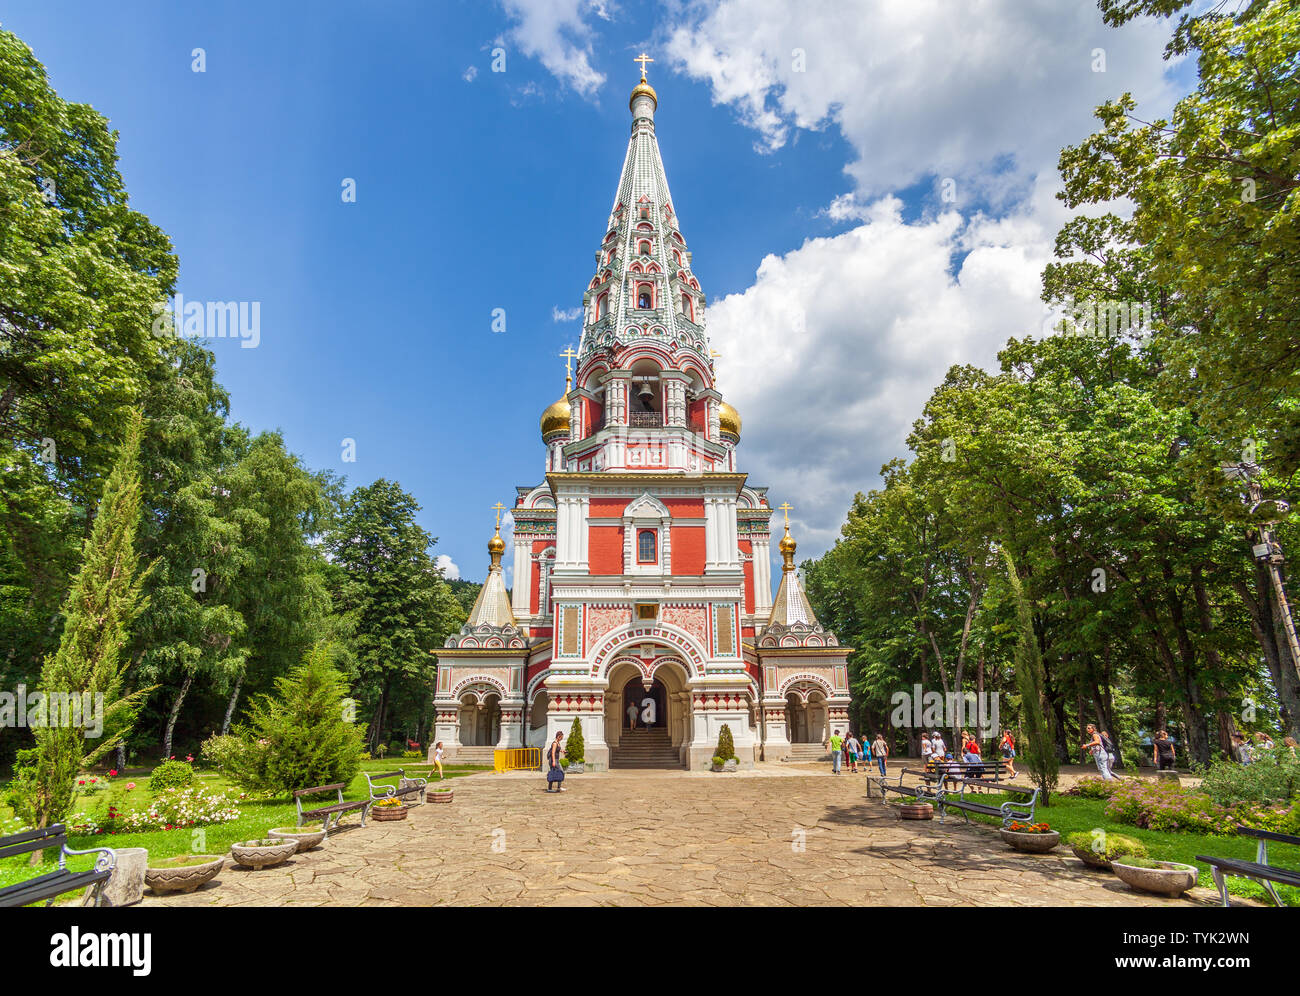 the Shipka Memorial Church or Shipka Monastery is a Bulgarian Orthodox church built near the town of Shipka Stock Photo